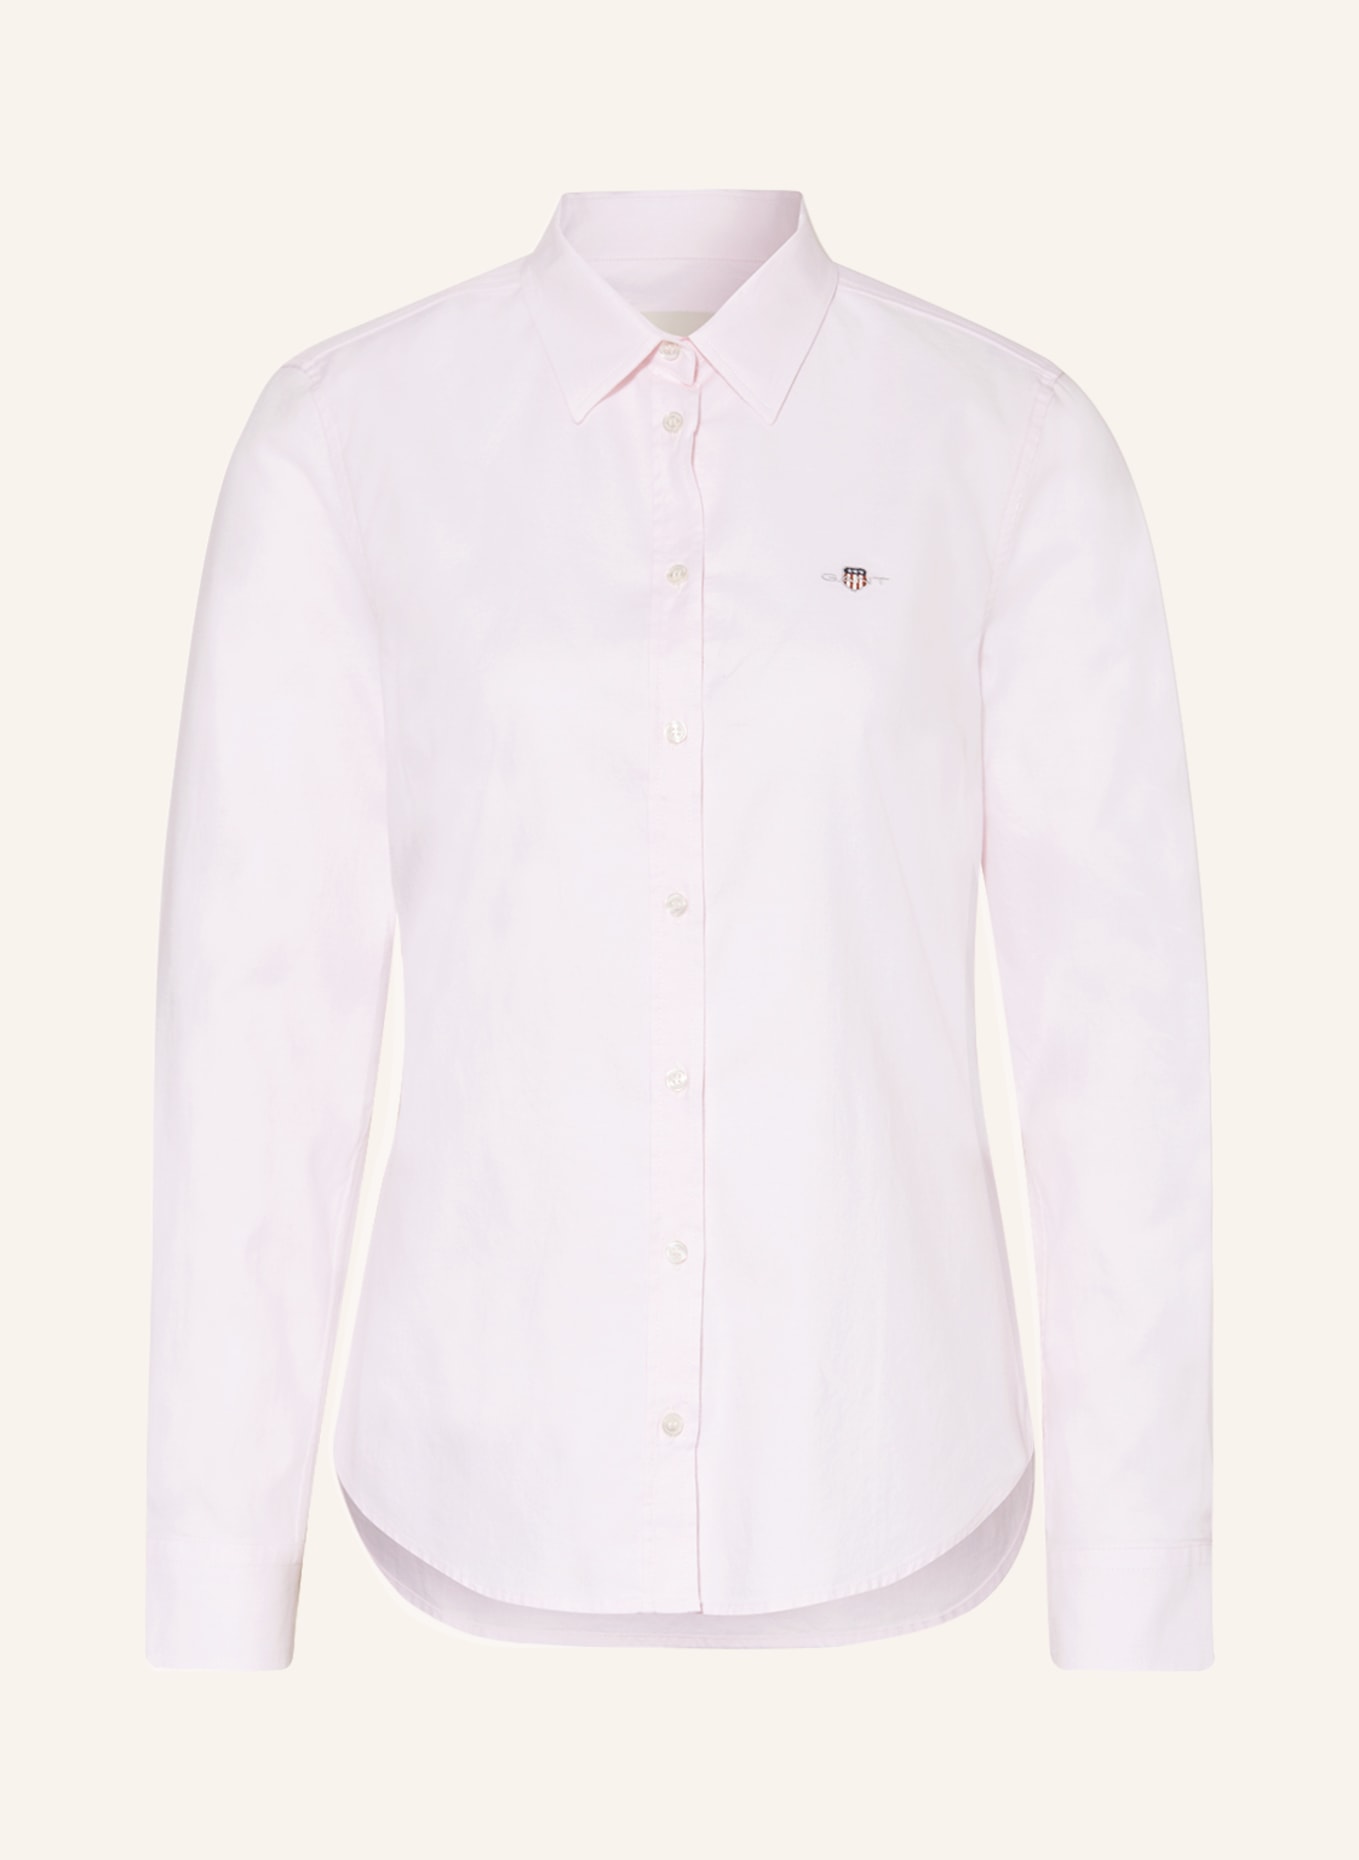 Рубашка блузка GANT, светло-розовый